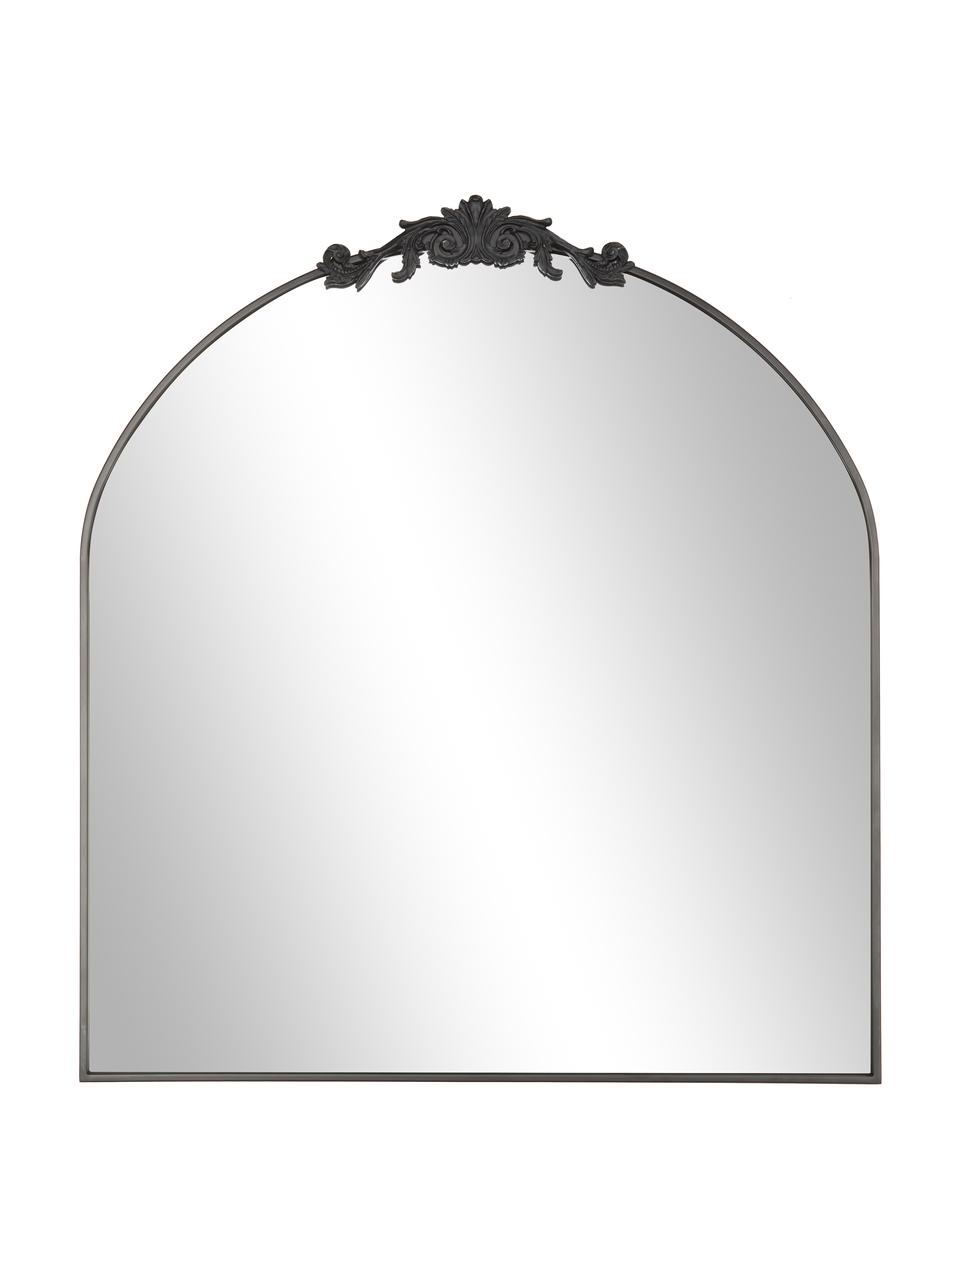 Miroir baroque avec cadre métallique noir Saida, Noir, larg. 90 x haut. 100 cm